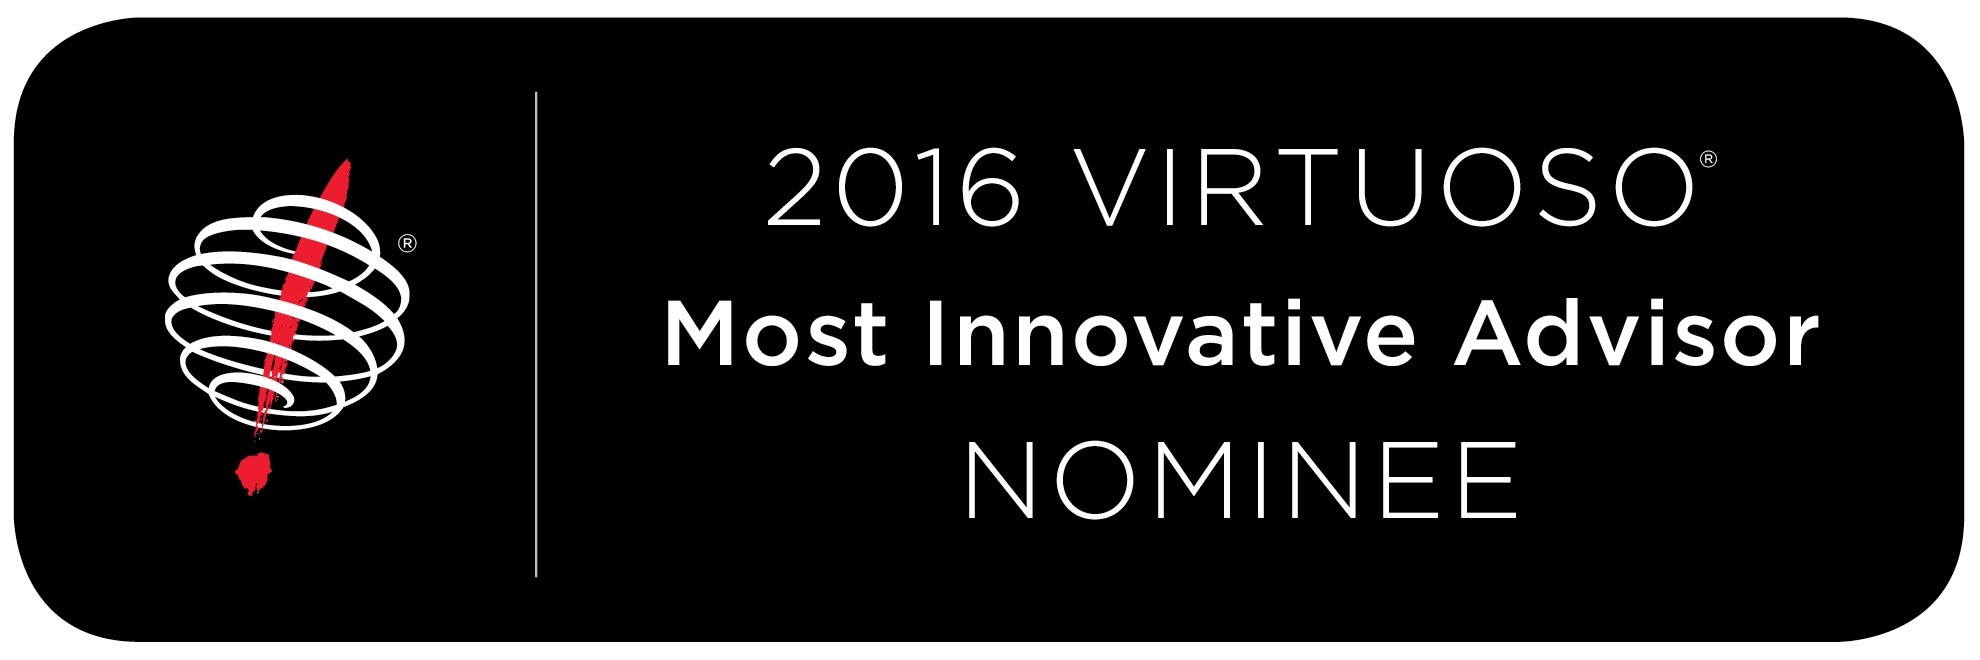 2016 Virtuoso Most Innovative Advisor Nominee